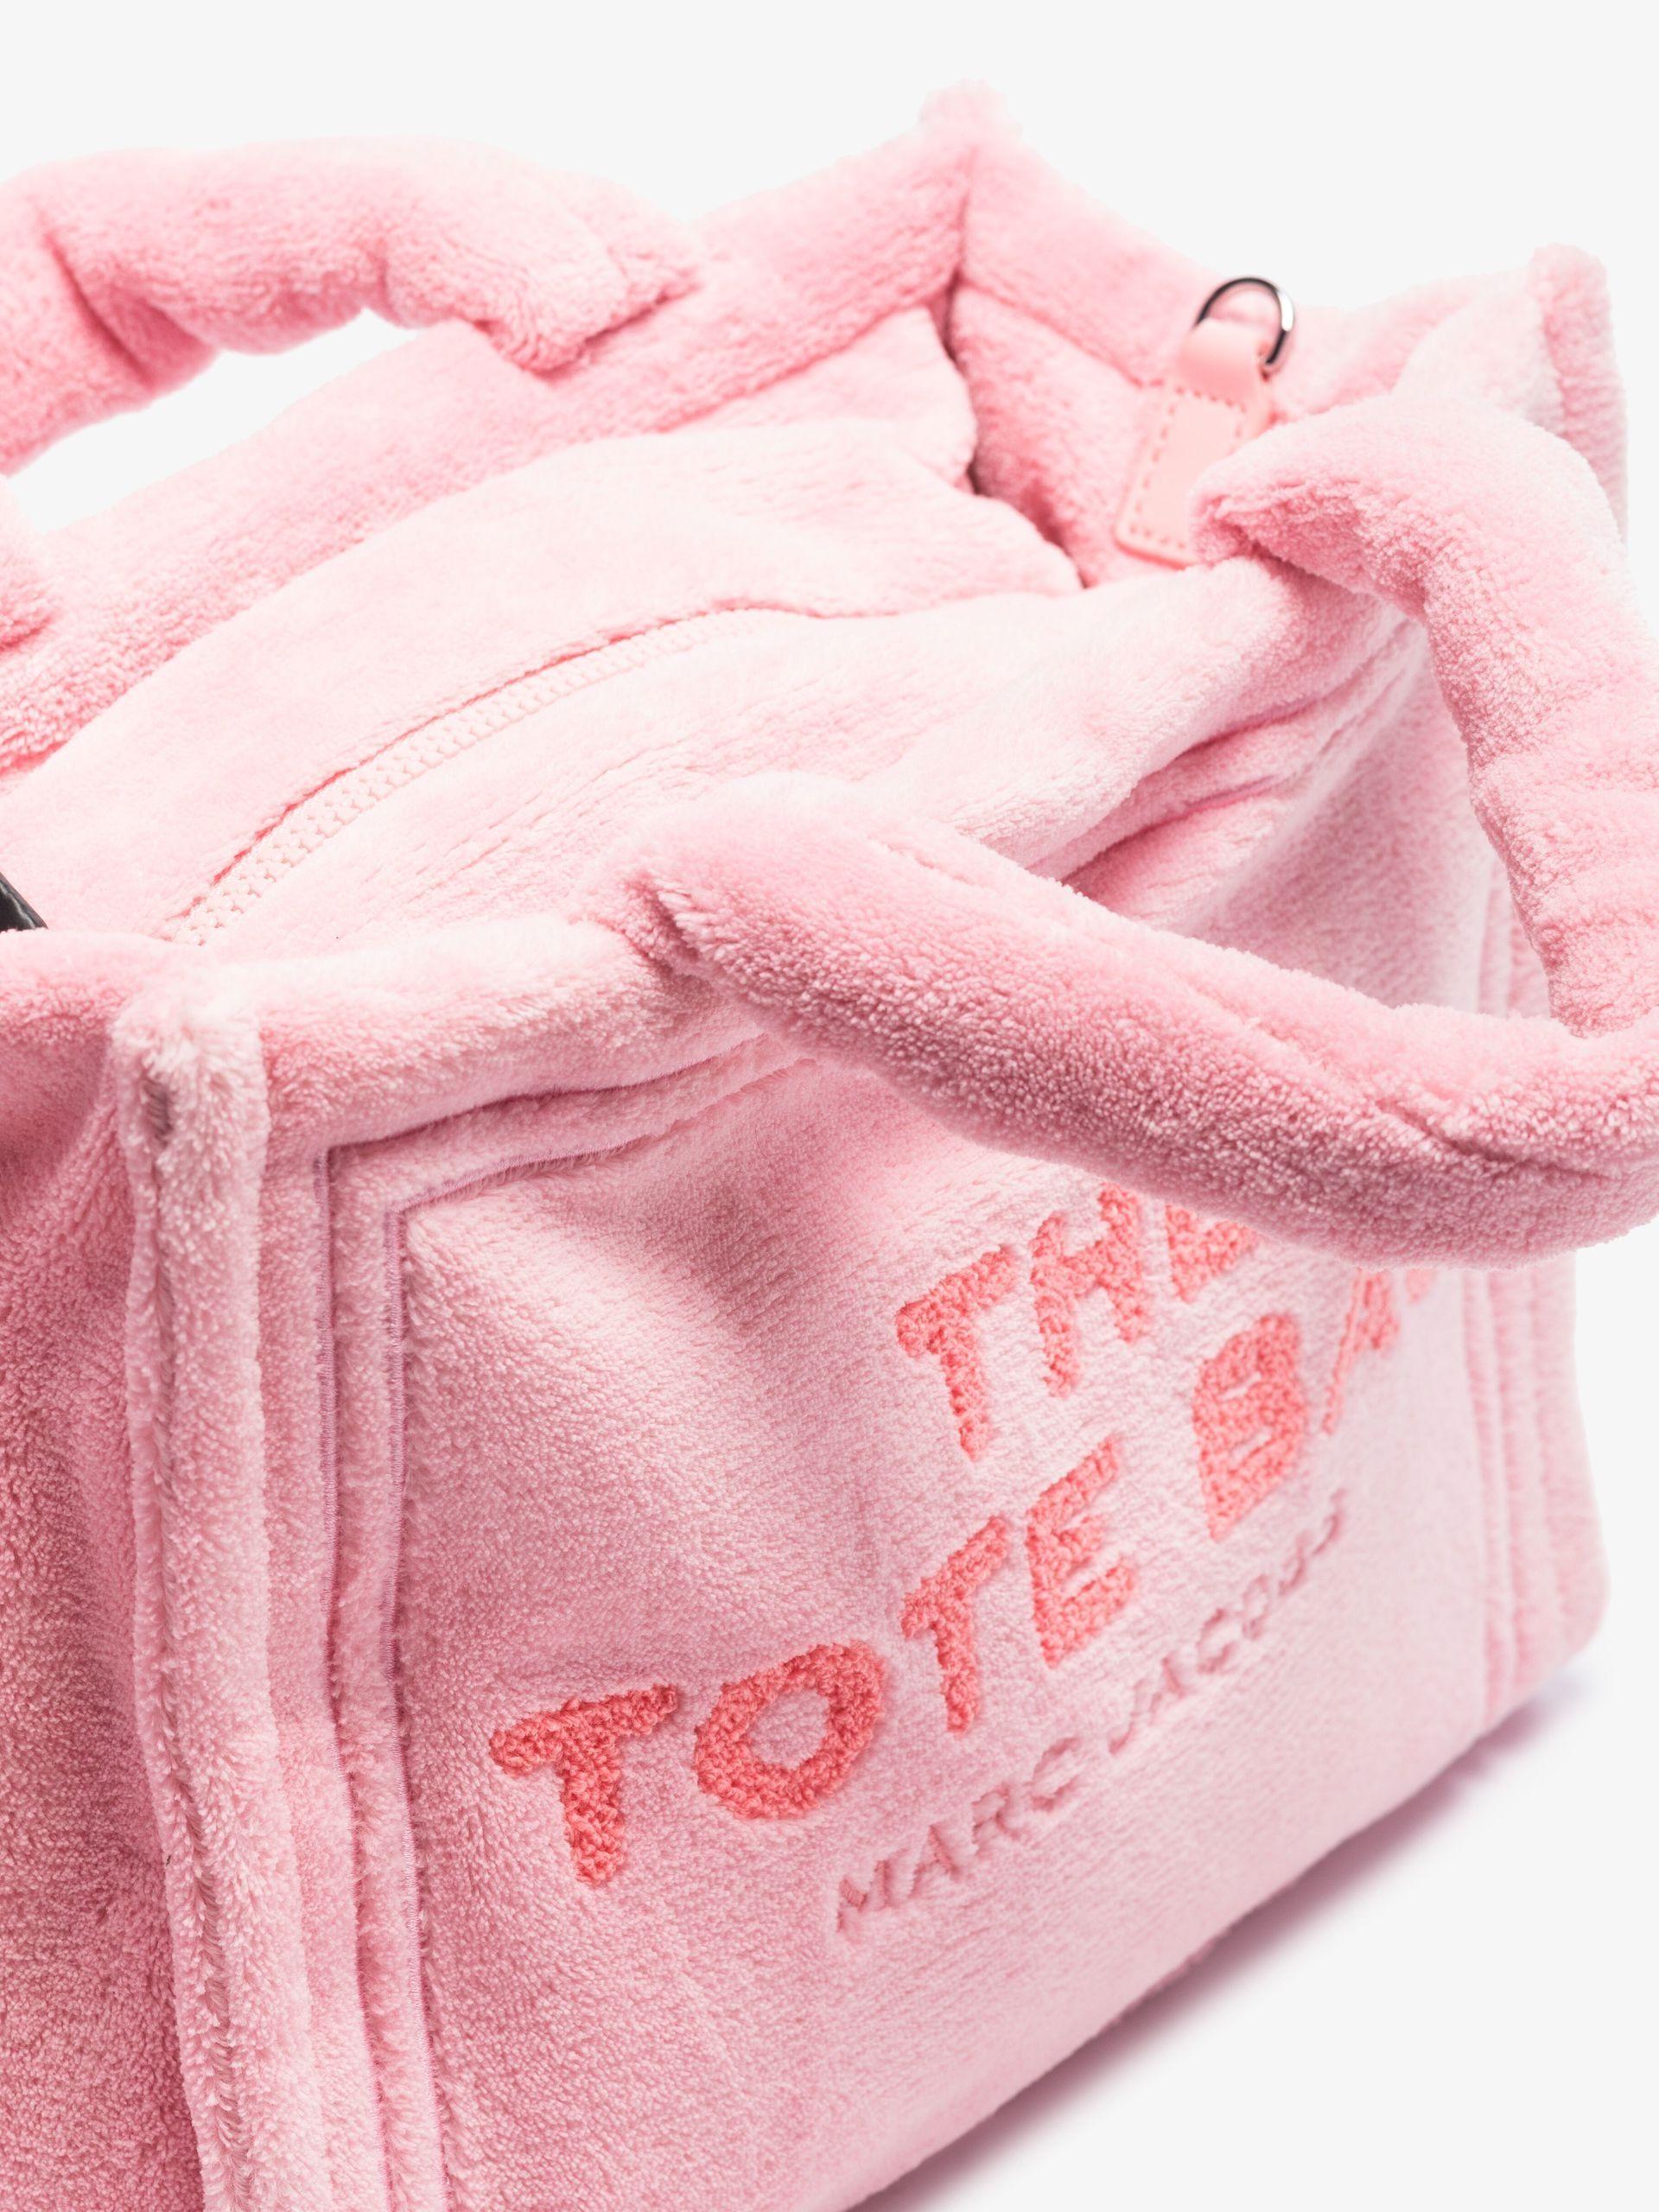 The small tote terry bag - Marc Jacobs - Women | Luisaviaroma